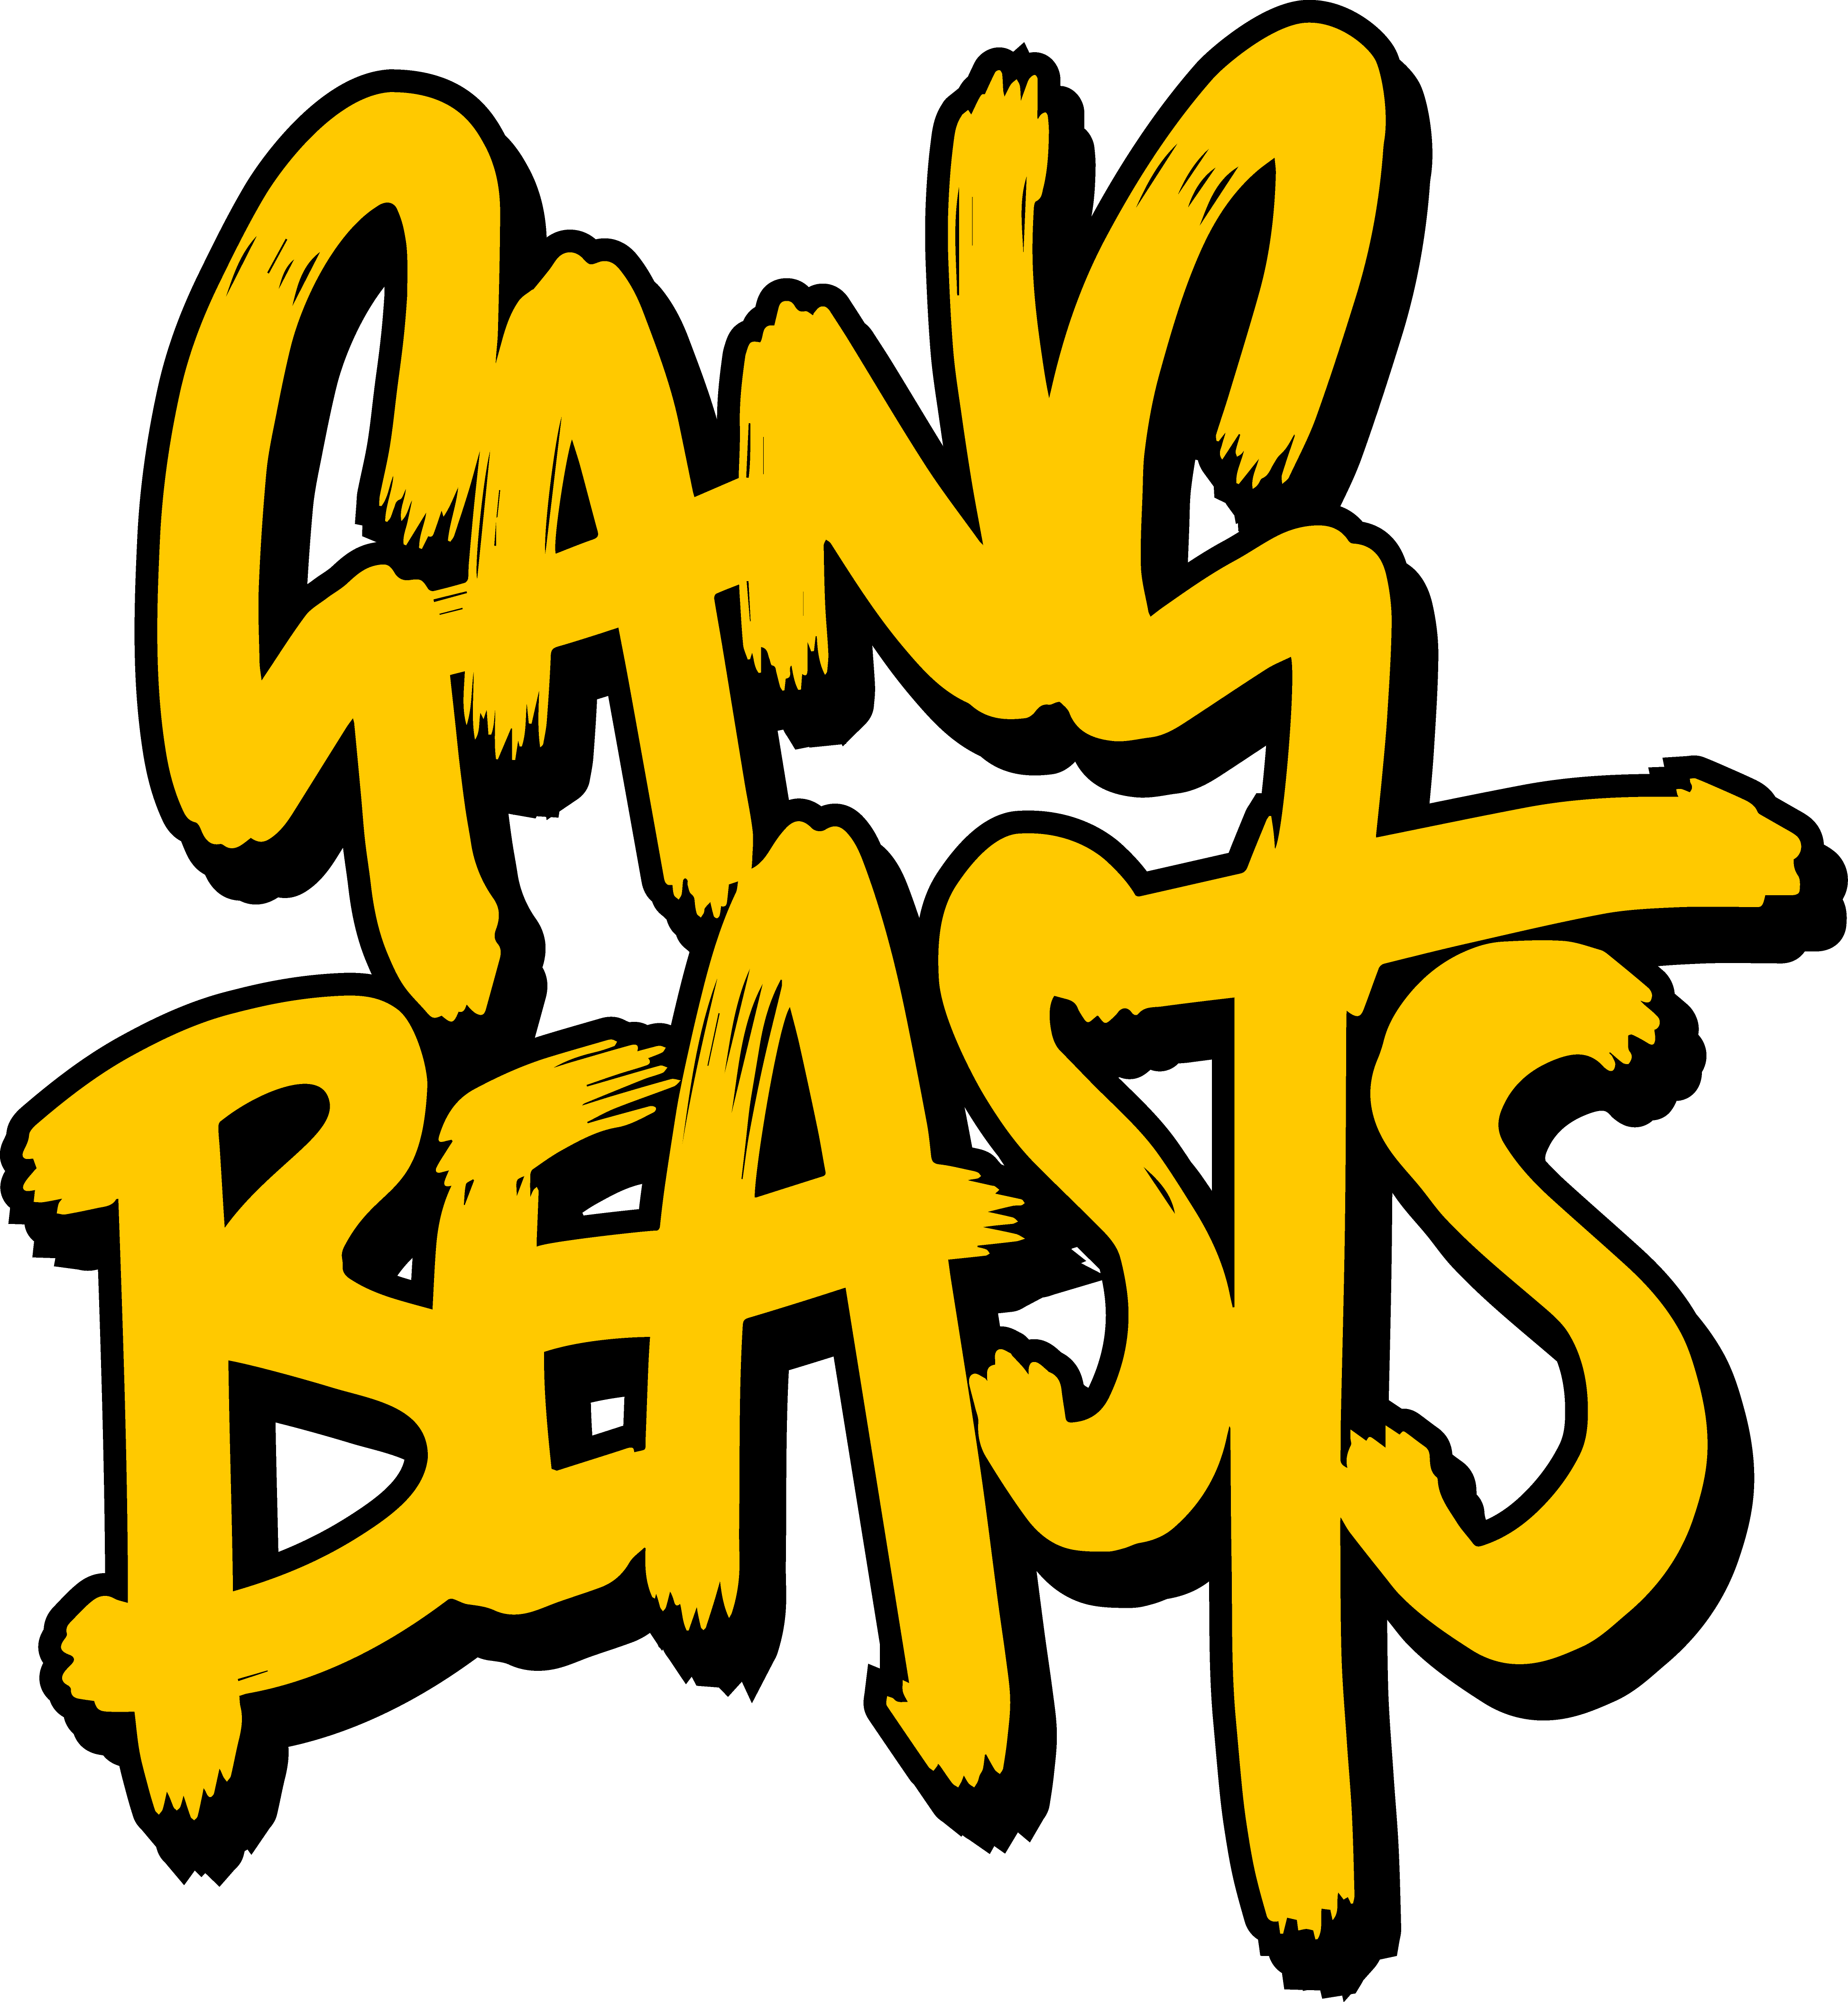 Beat - Gang